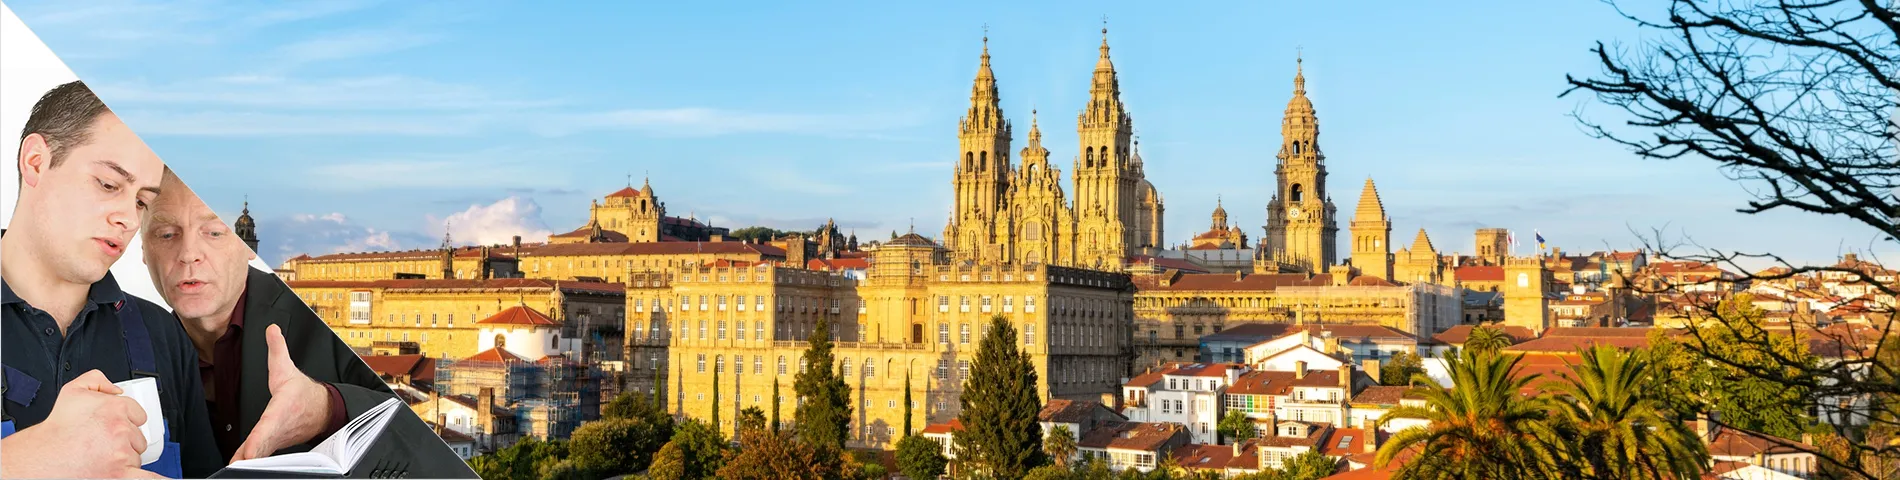 Santiago de Compostela - One-to-One